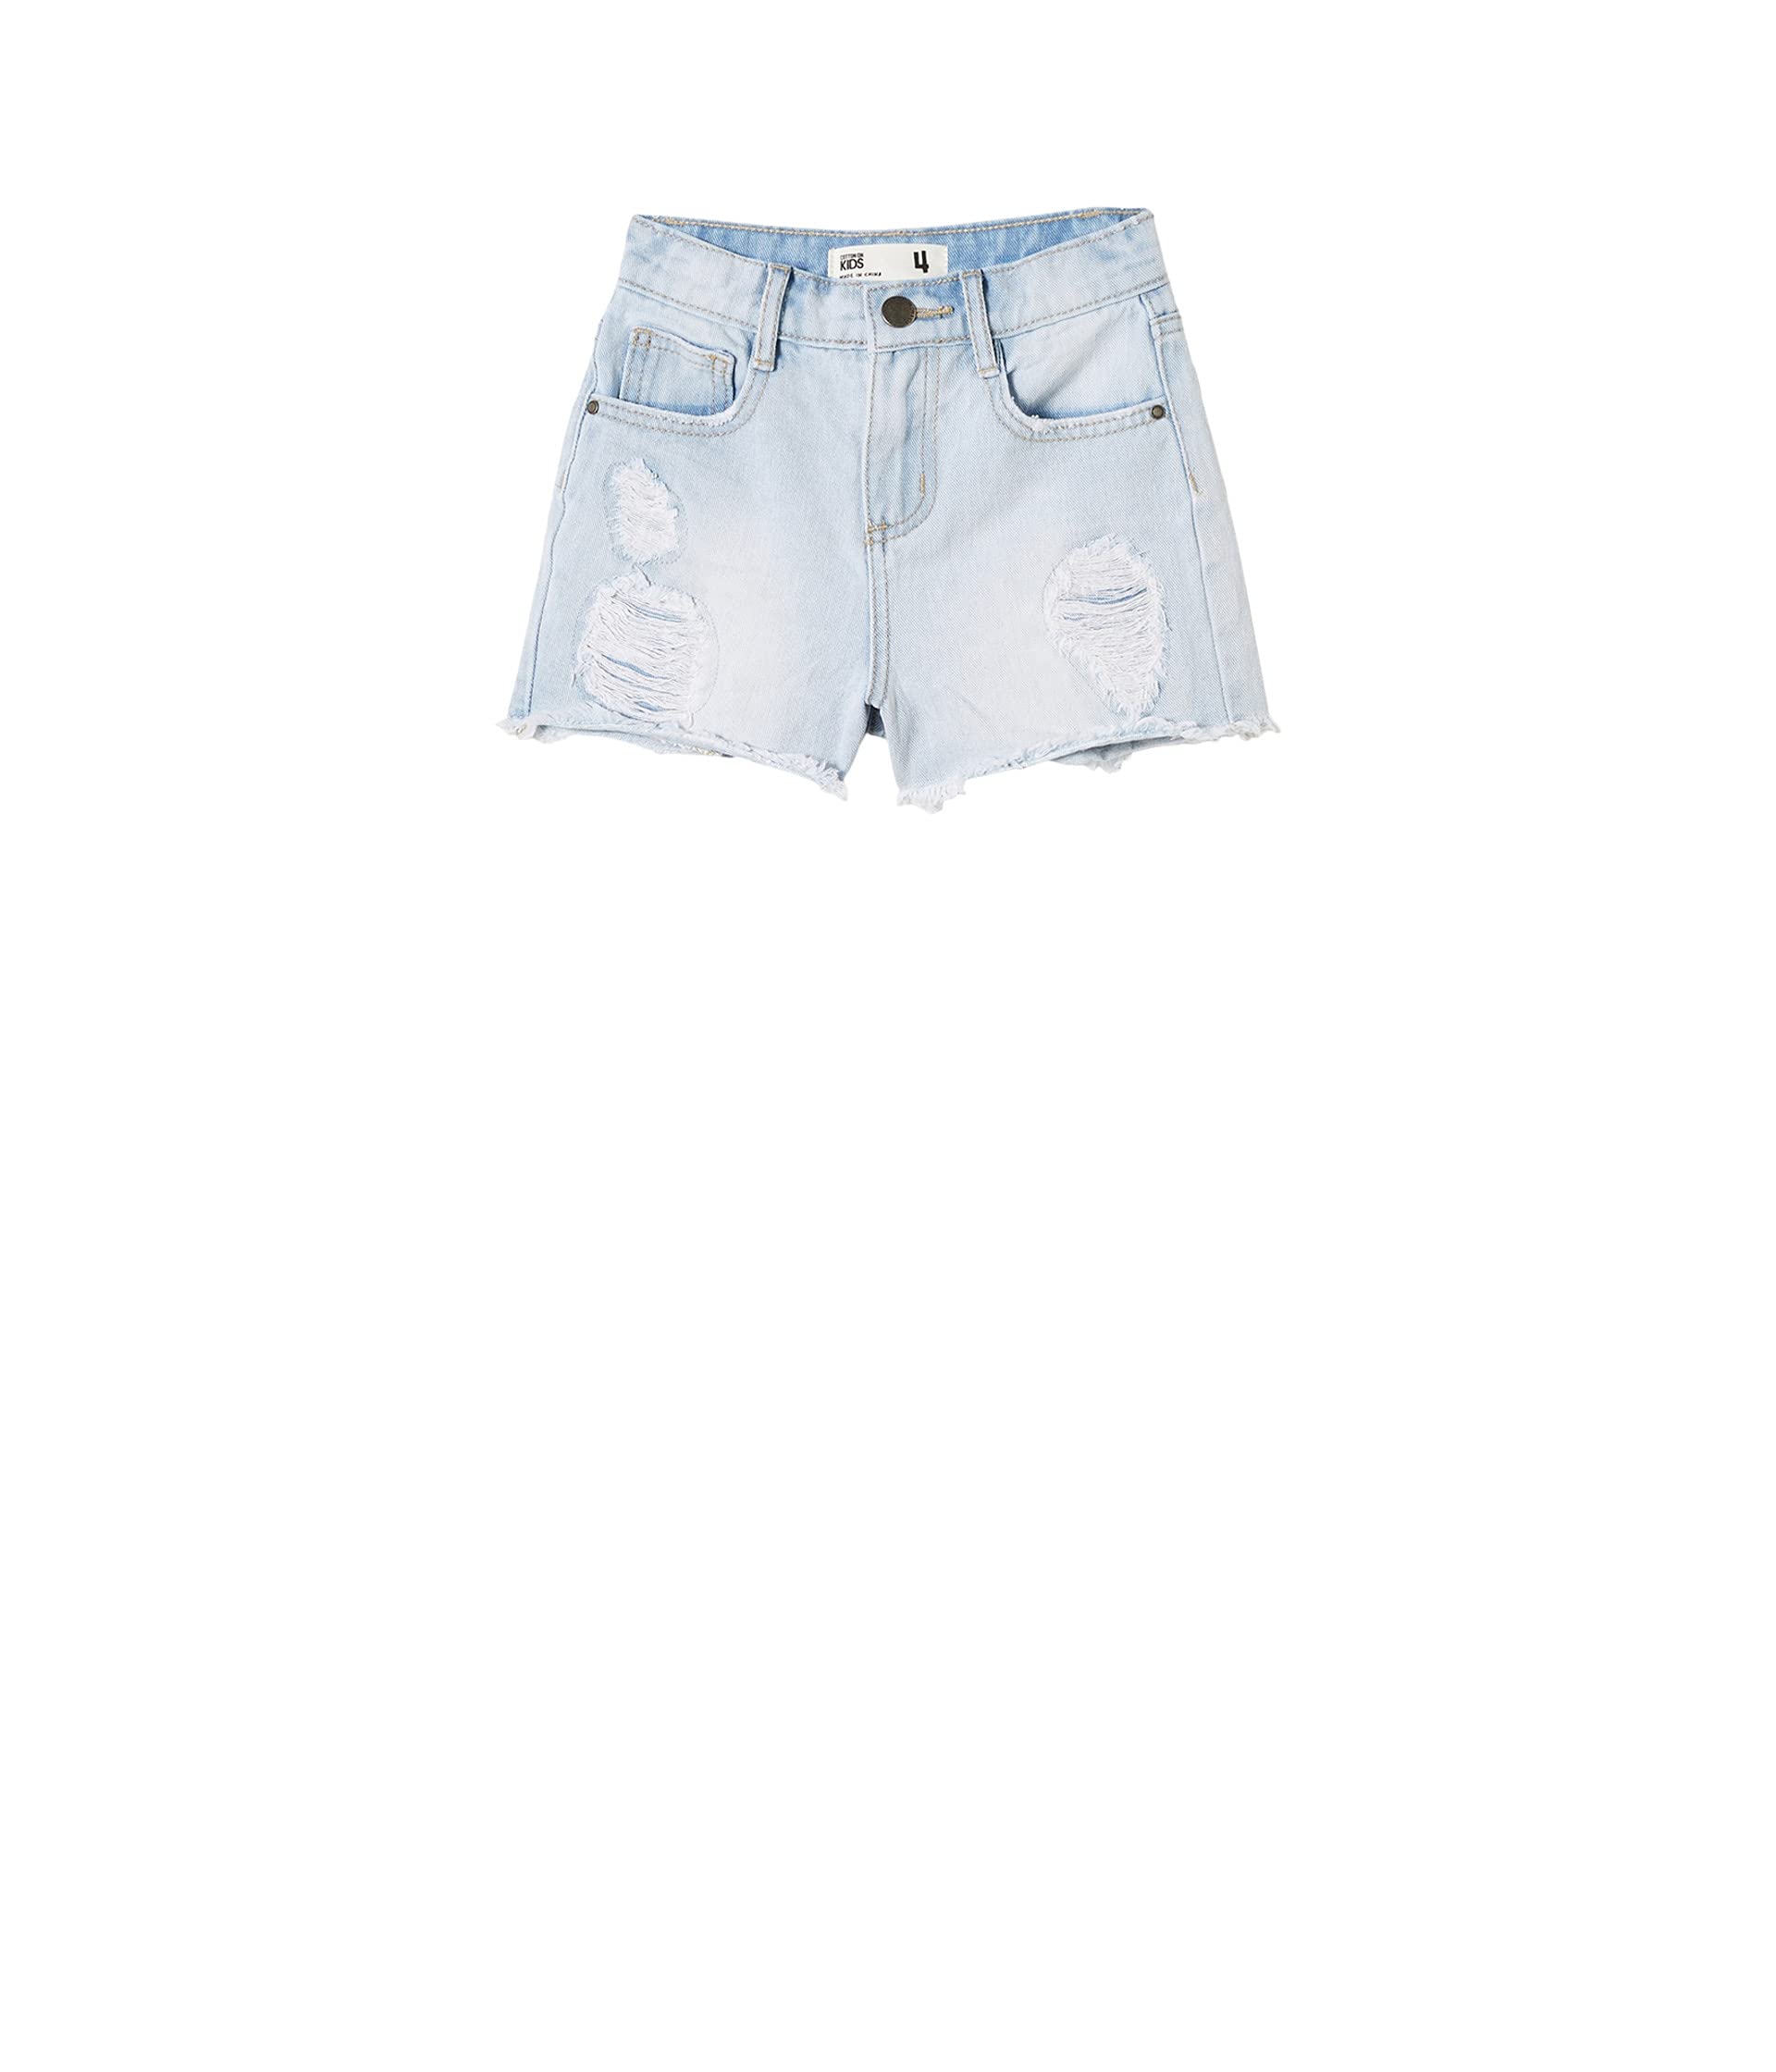 Шорты COTTON ON, Sunny Denim Shorts джинсовые шорты sunny cotton on цвет weekend wash rips